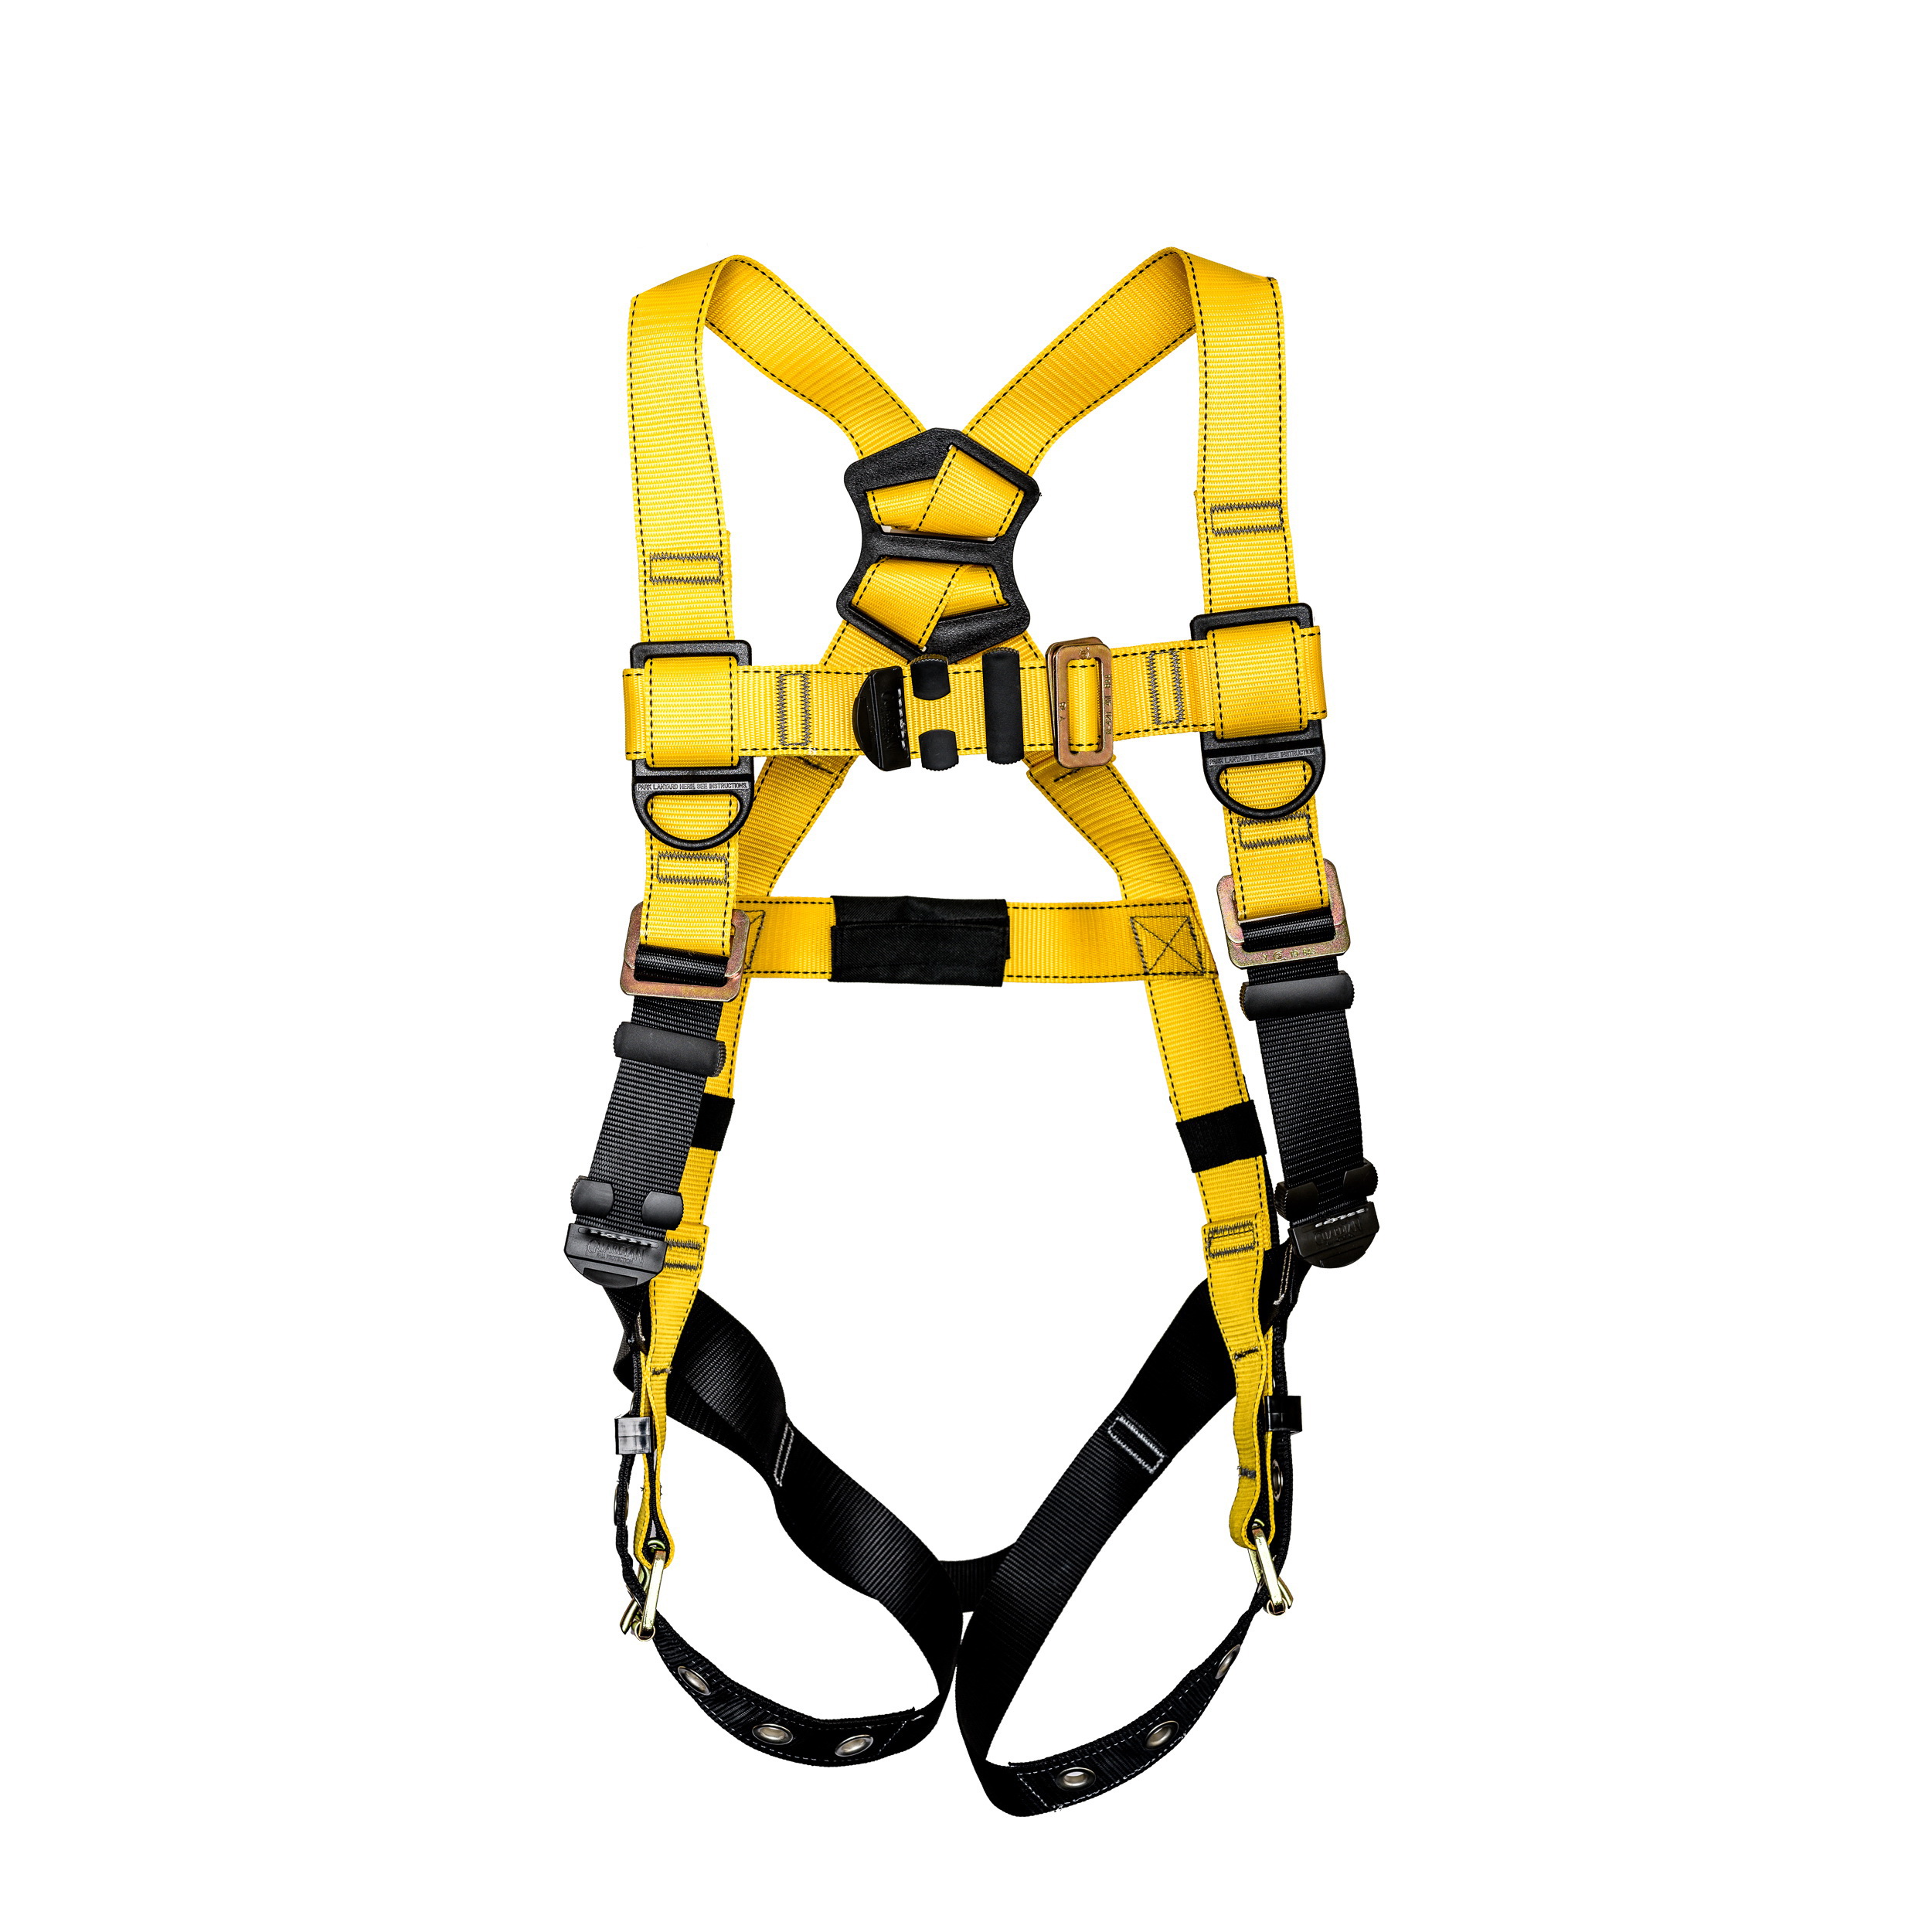 1 Series 37006 Full Body Harness, XL/2XL, 130 to 420 lb, Polyester Webbing, Black/Yellow